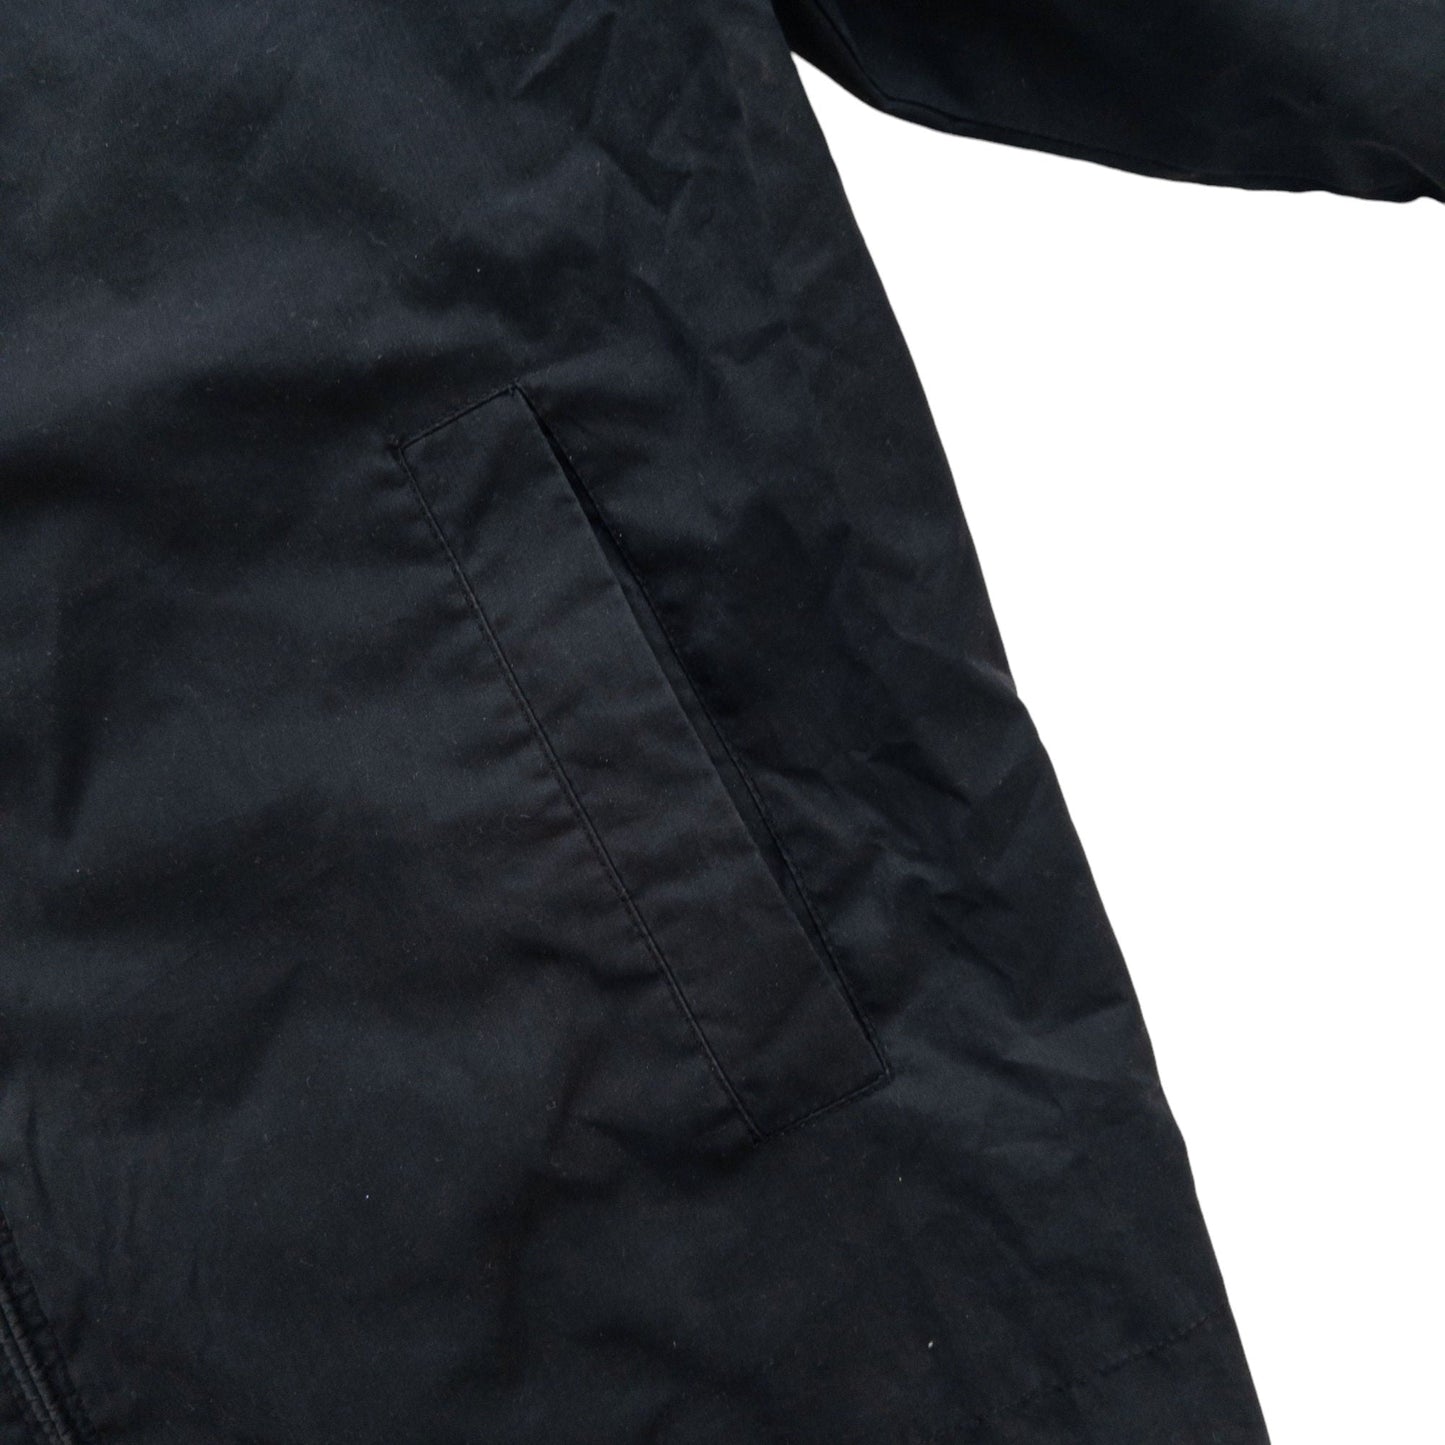 Vintage YSL Yves Saint Laurent Harington Jacket Size M